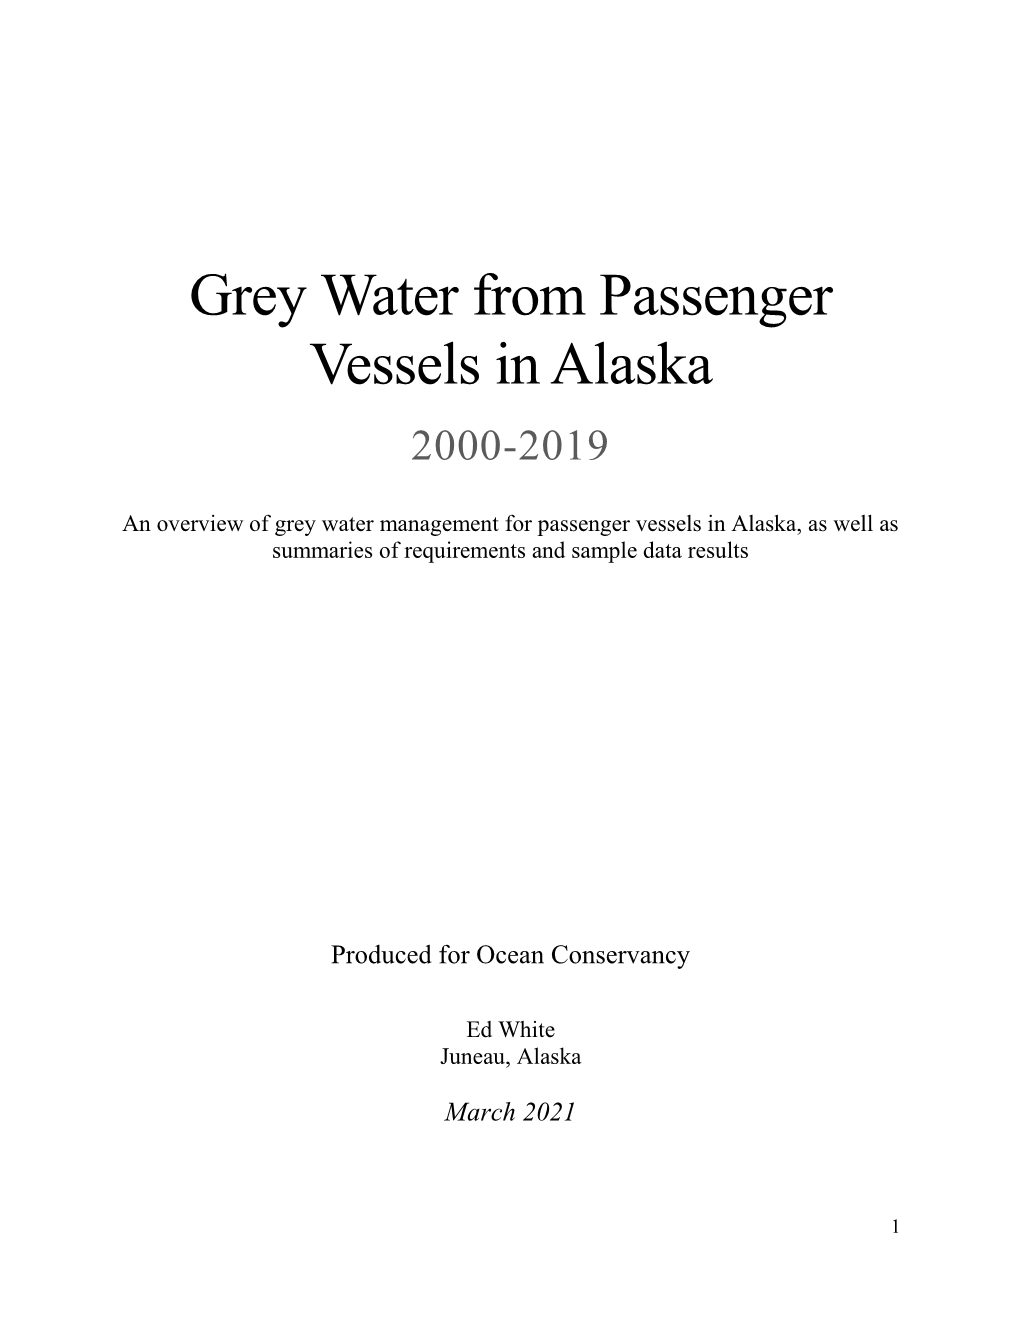 Grey Water from Passenger Vessels in Alaska